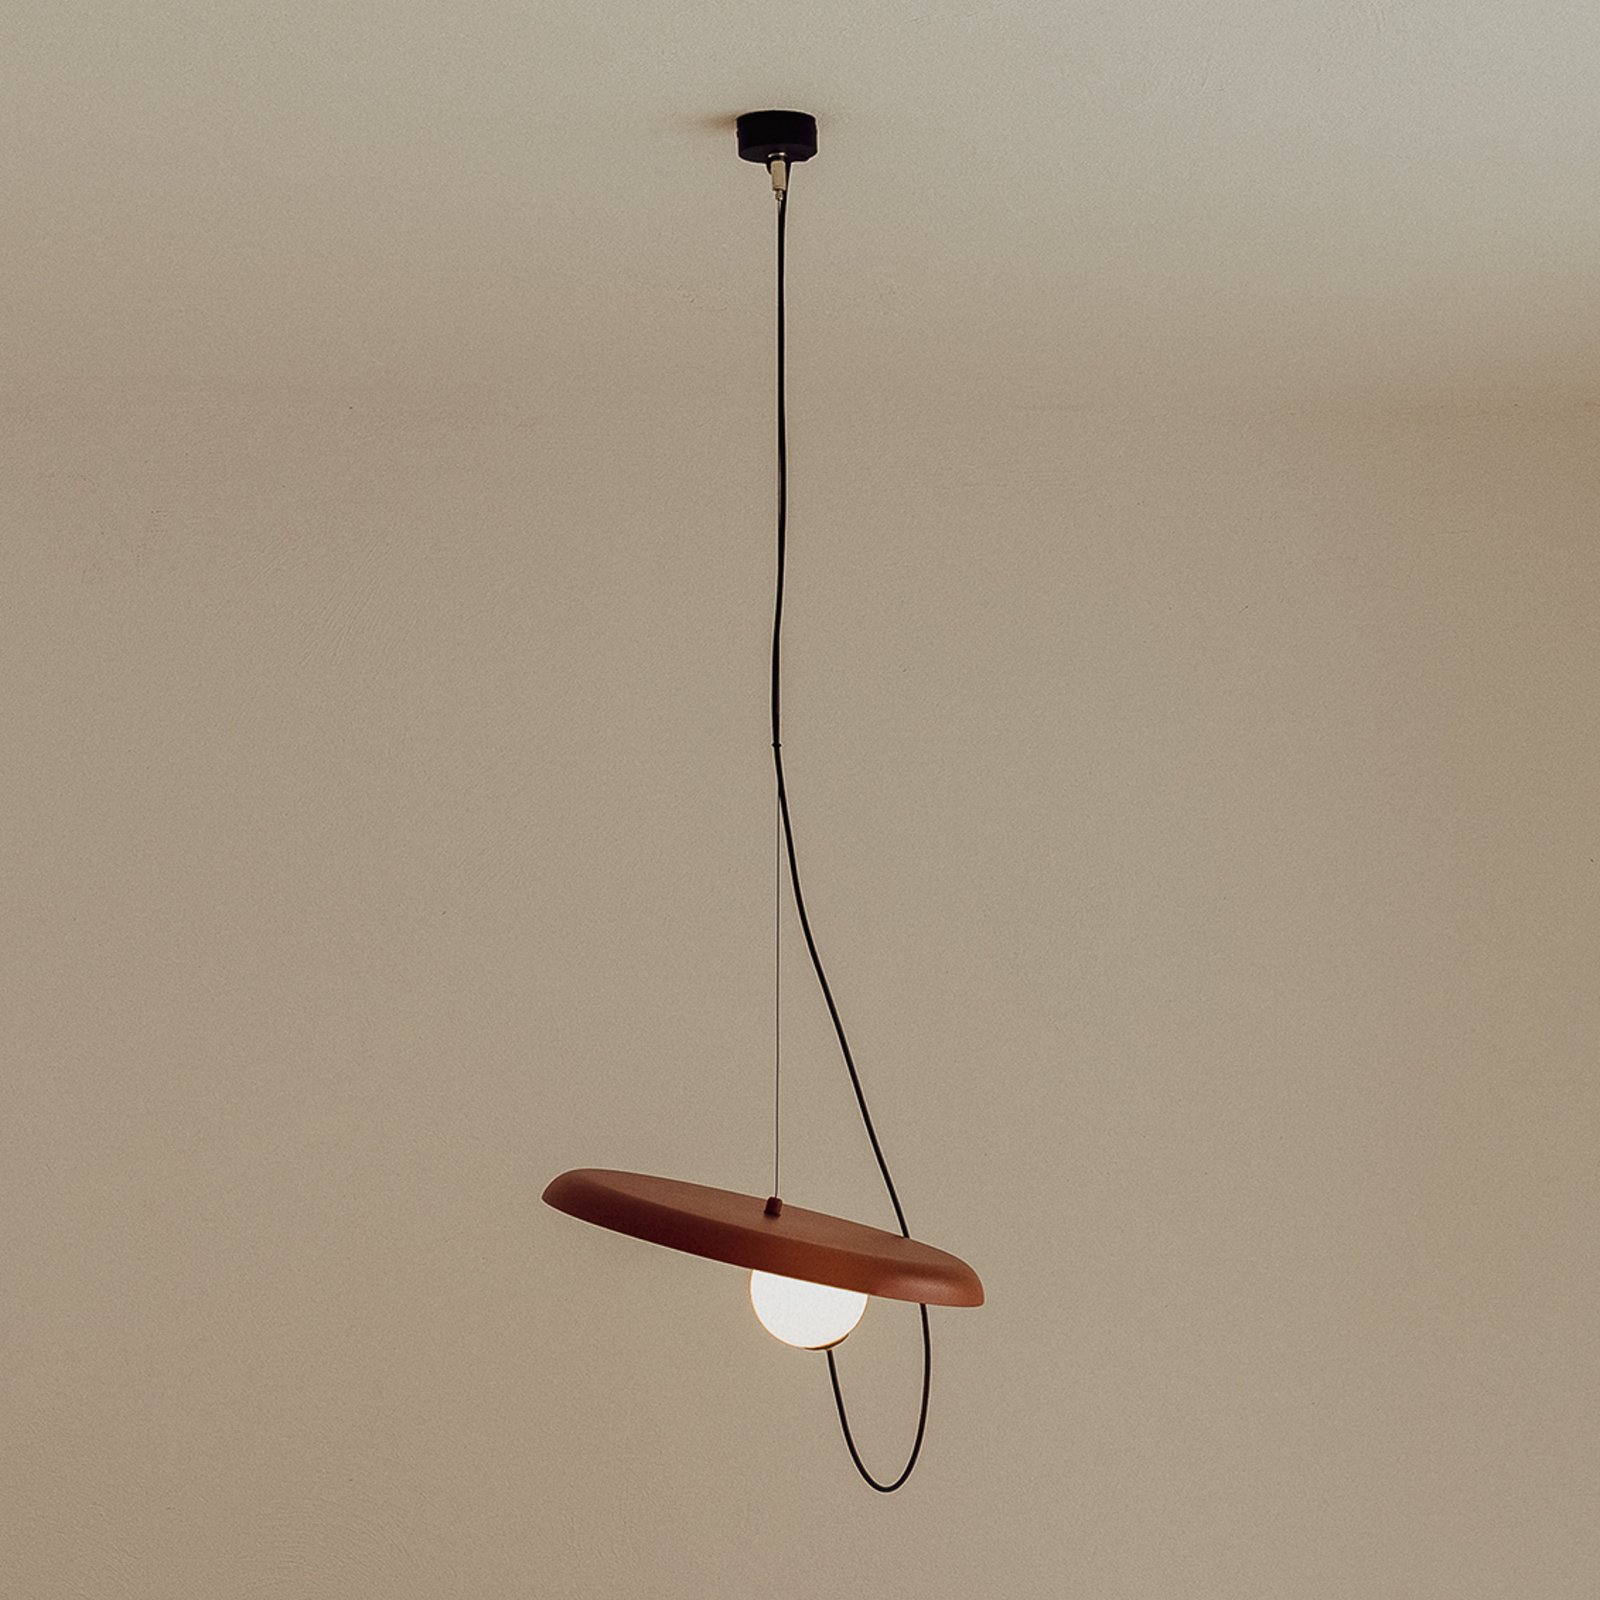 Milan Wire hanglamp Ø 38 cm kopermetallic